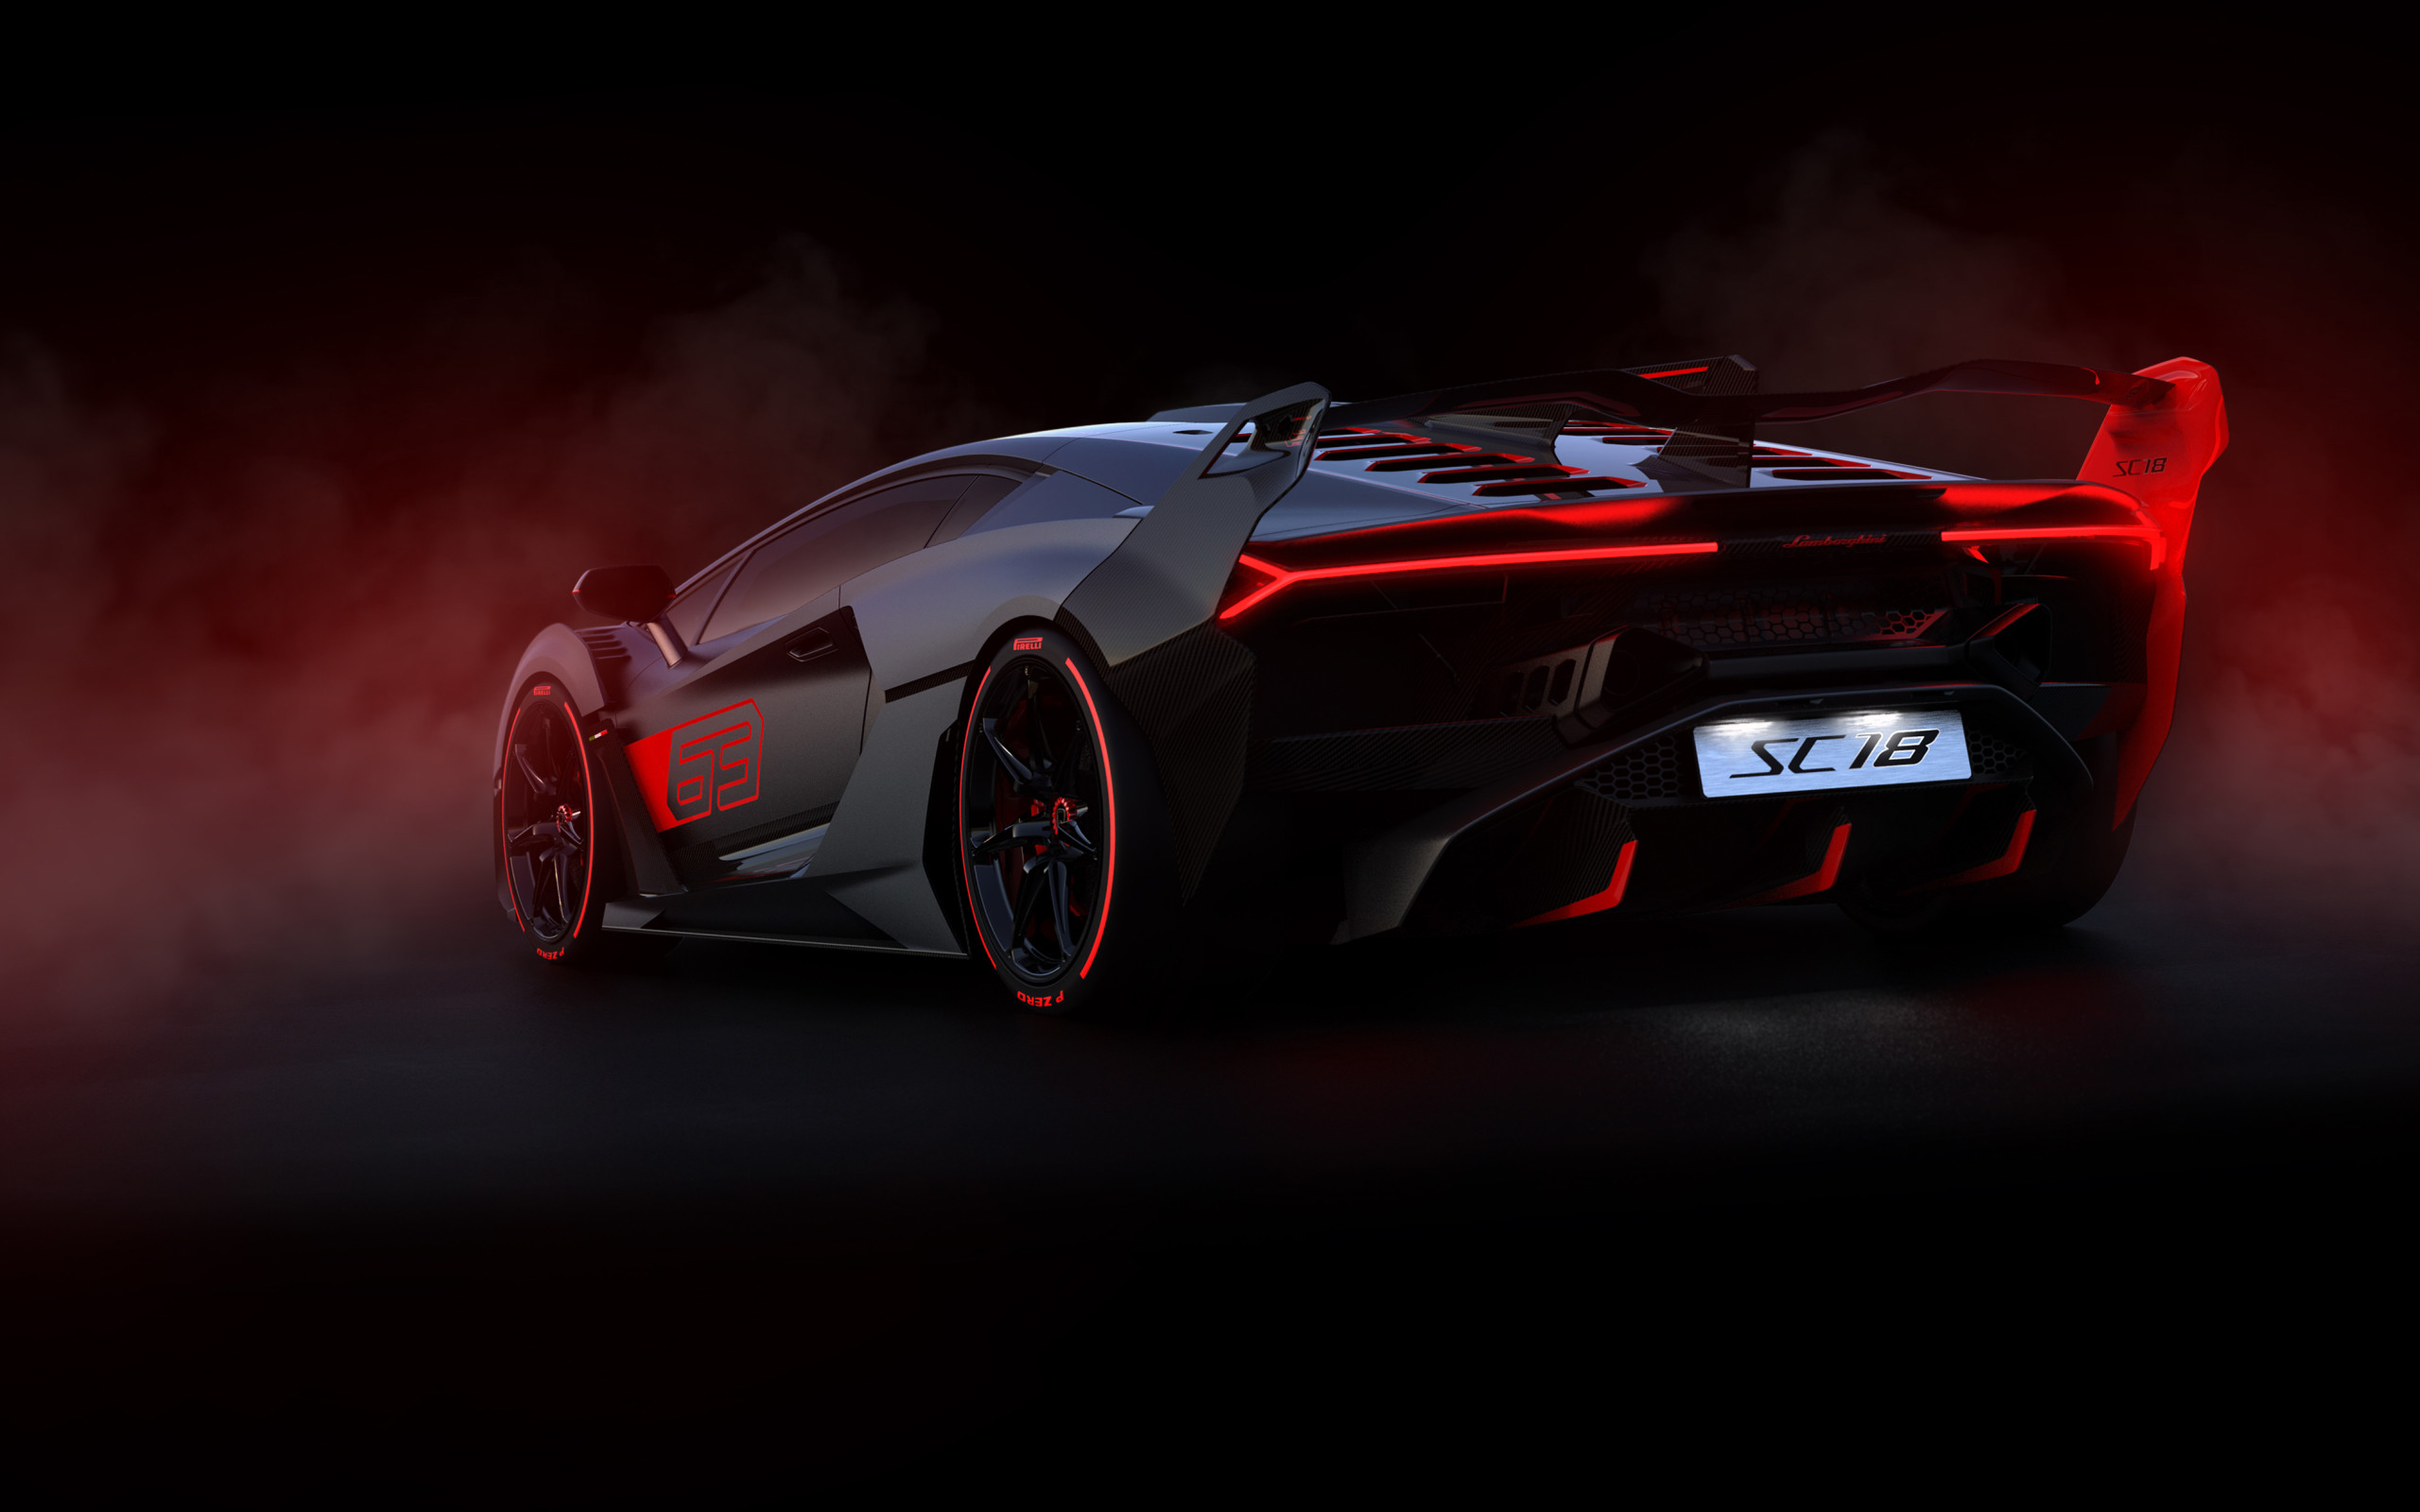 2560x1600, Wallpaper Of Vehicles, Car, Red, Black, - Lamborghini Sc18 - HD Wallpaper 